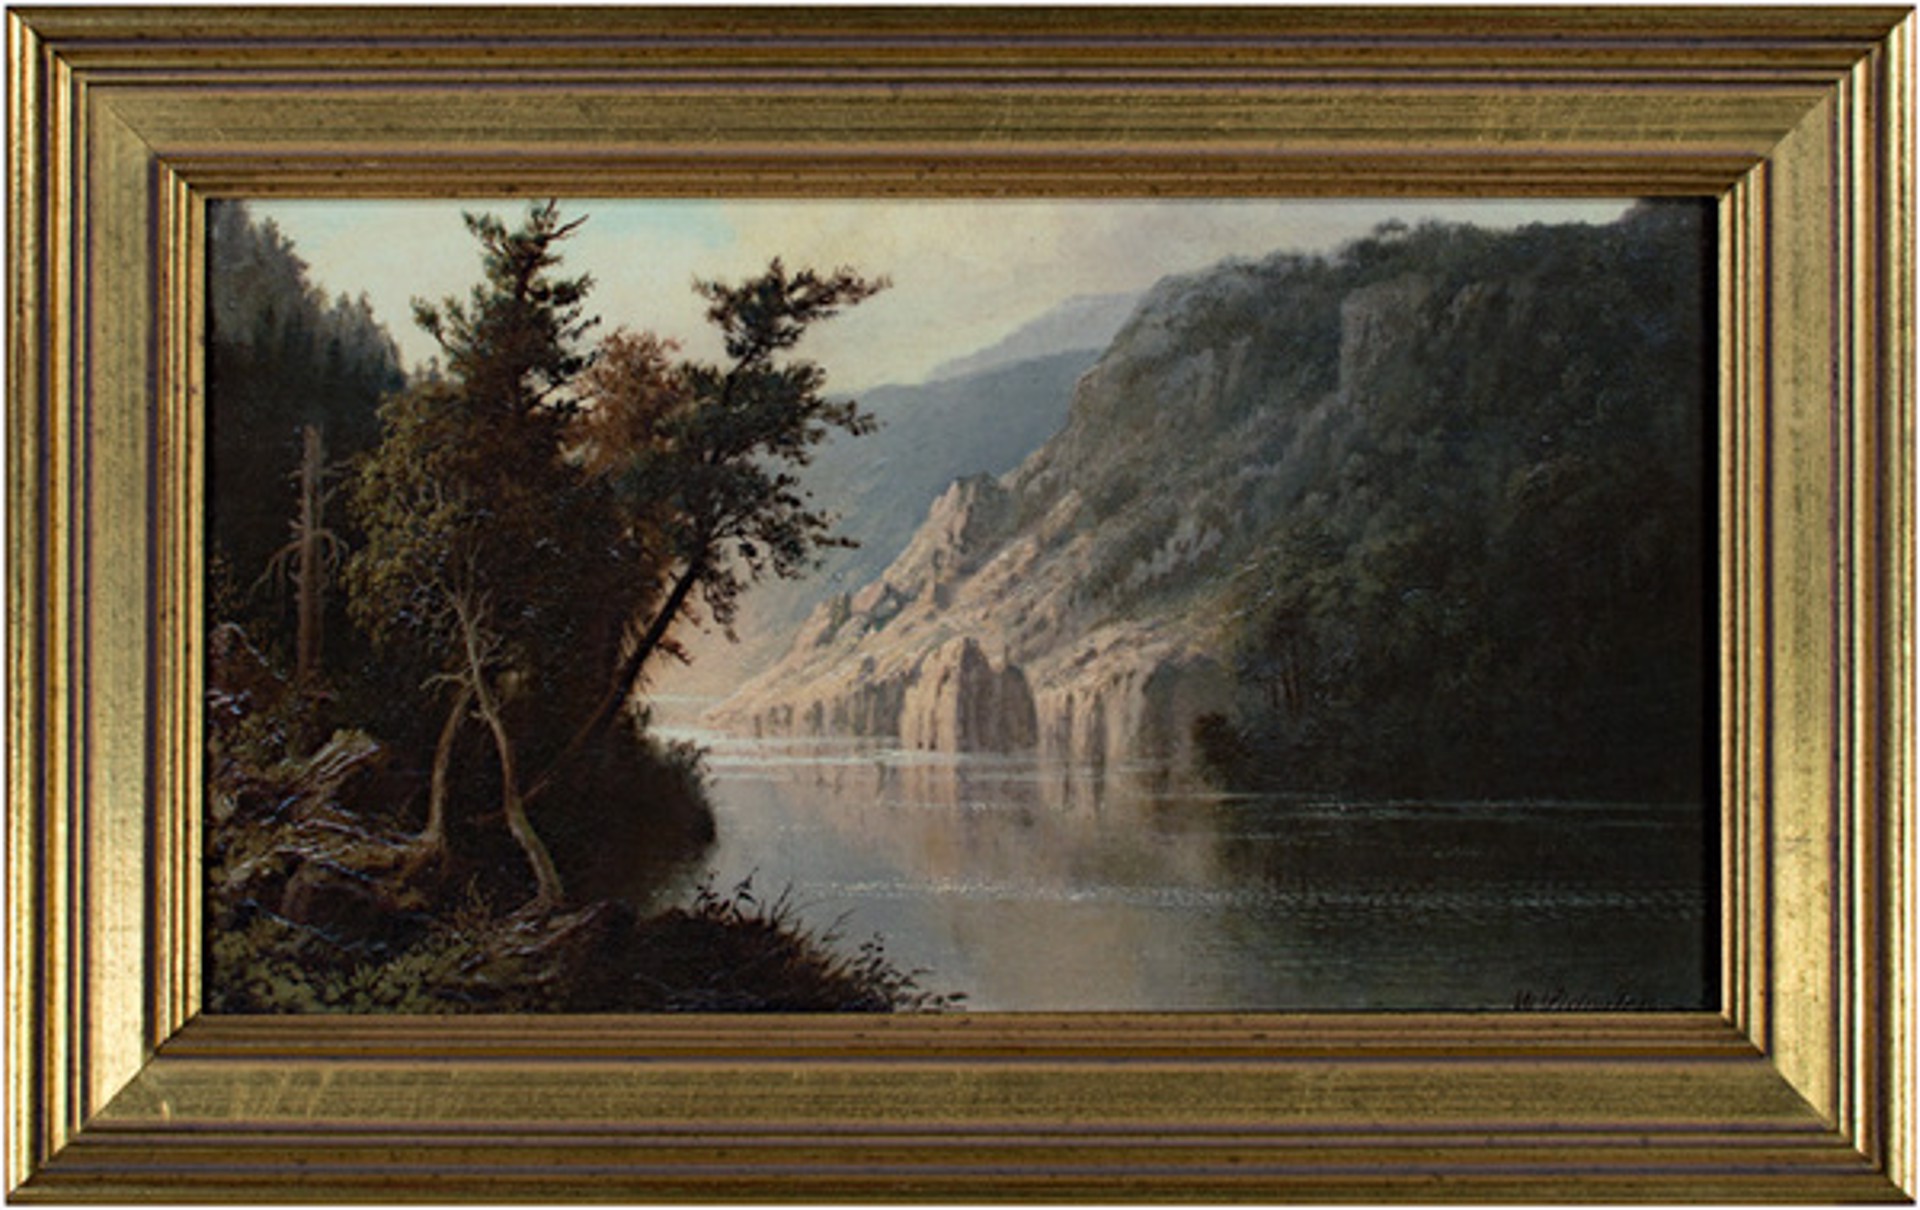 Western Rockies by Henry (Henrich) Vianden